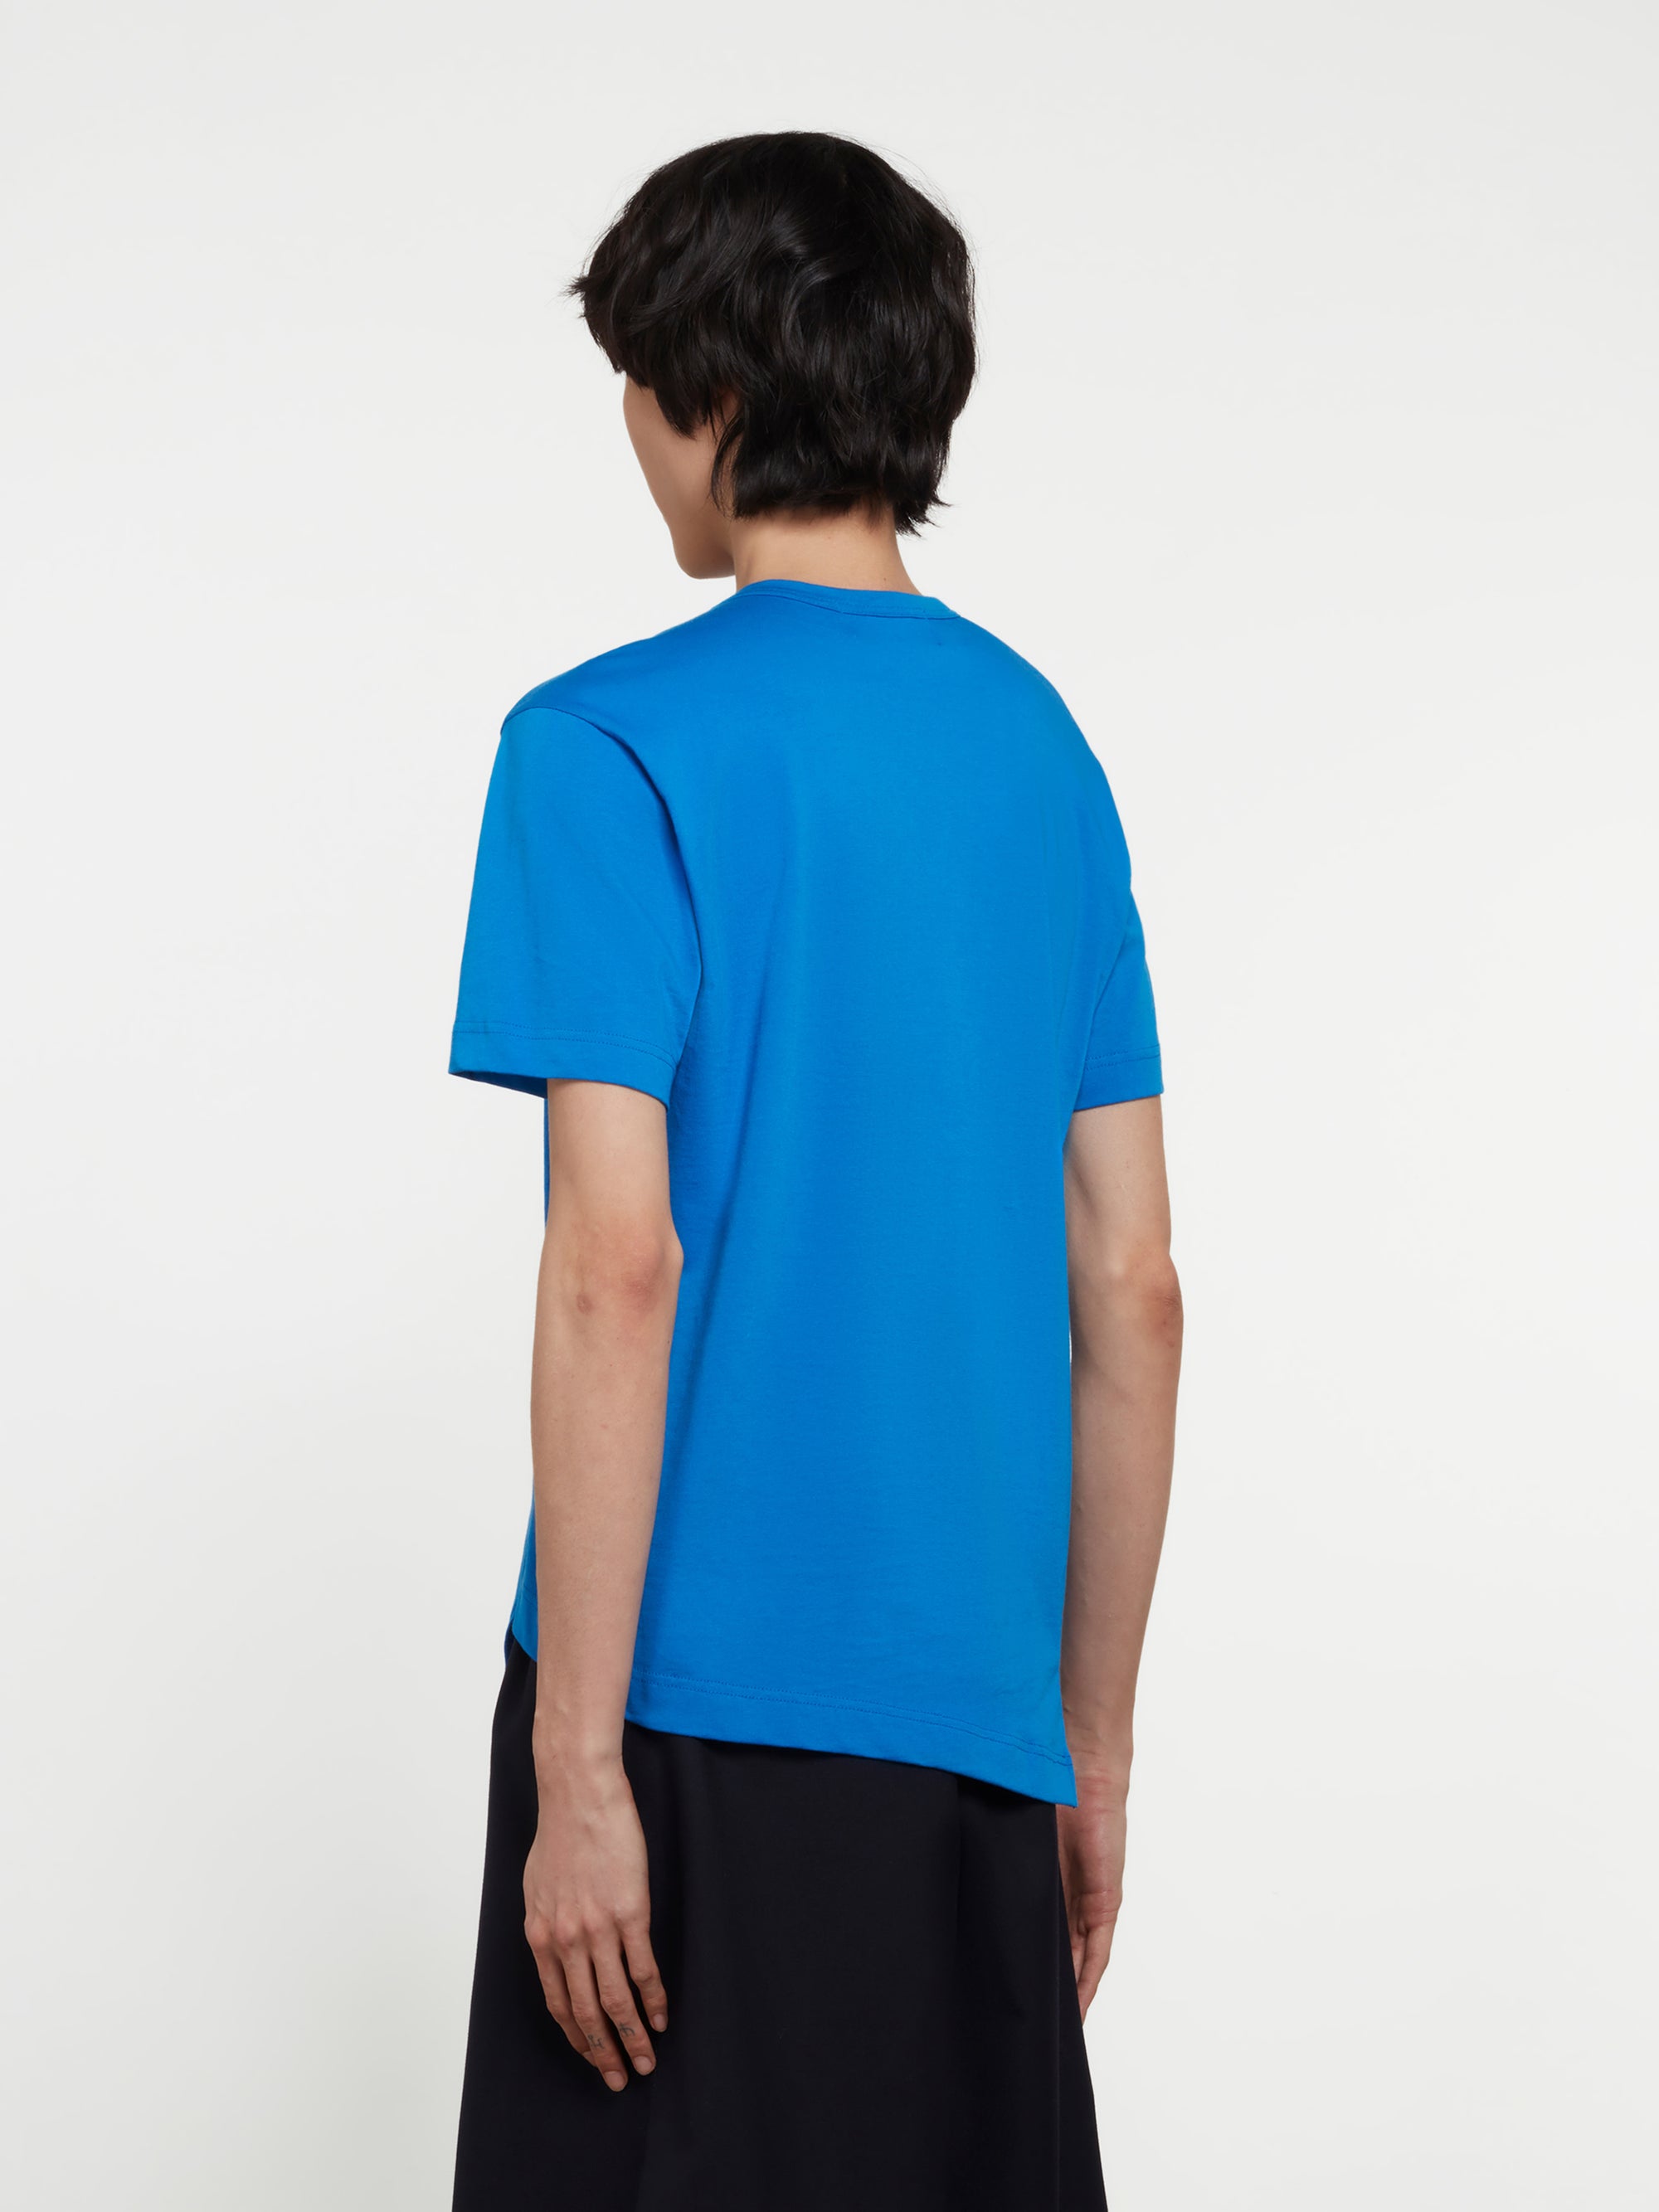 CDG Shirt - Lacoste Men's T-Shirt - (Blue) view 3